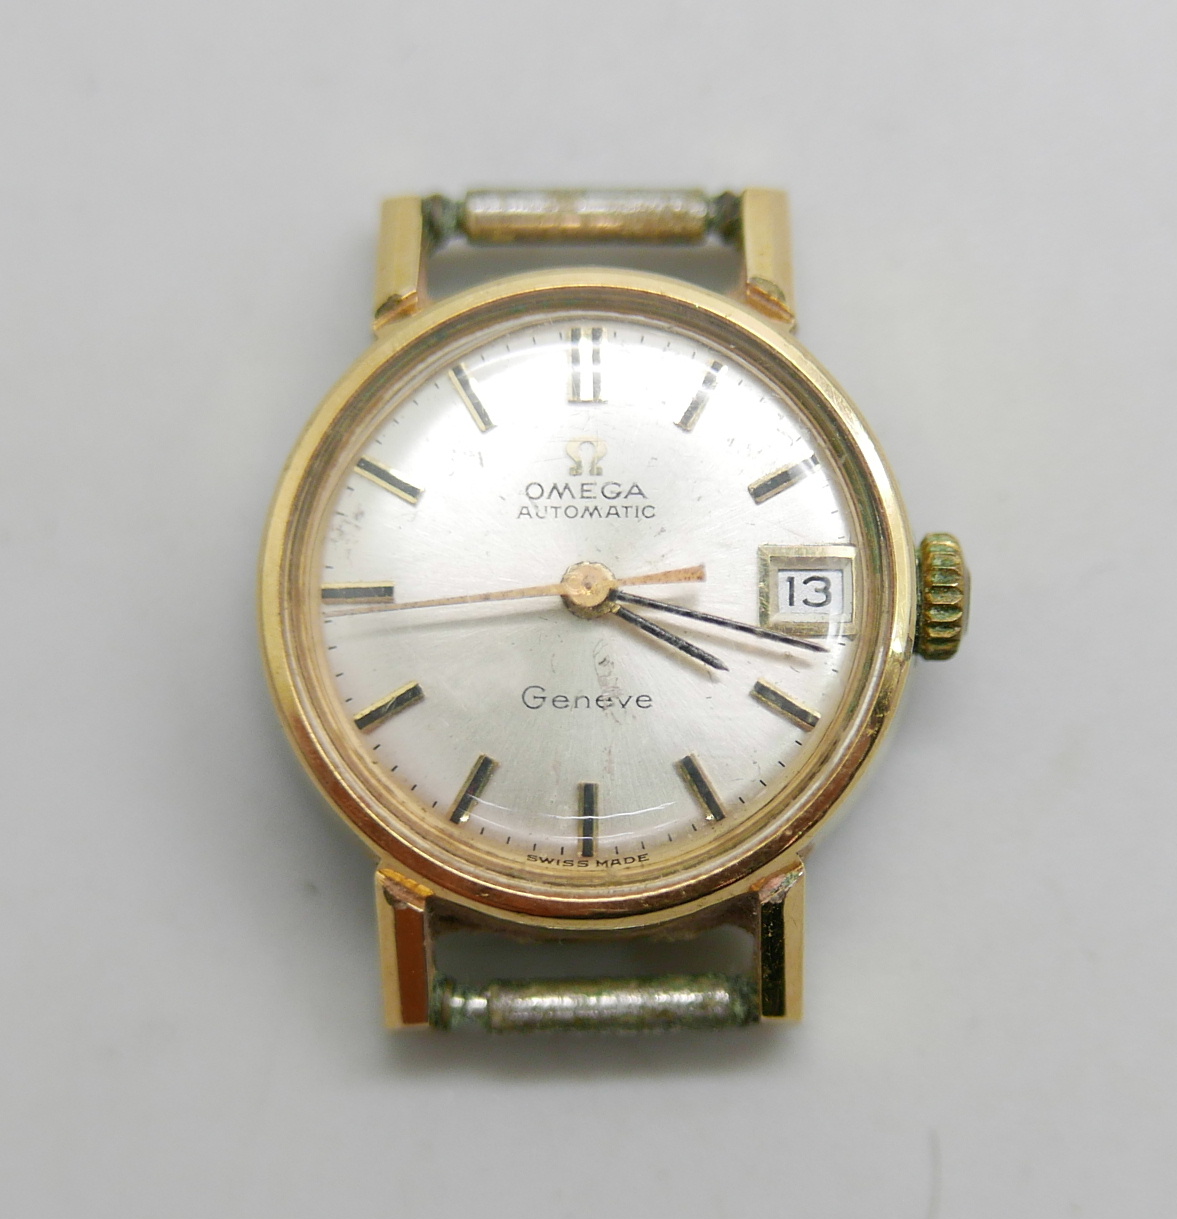 A lady's Omega automatic date wristwatch